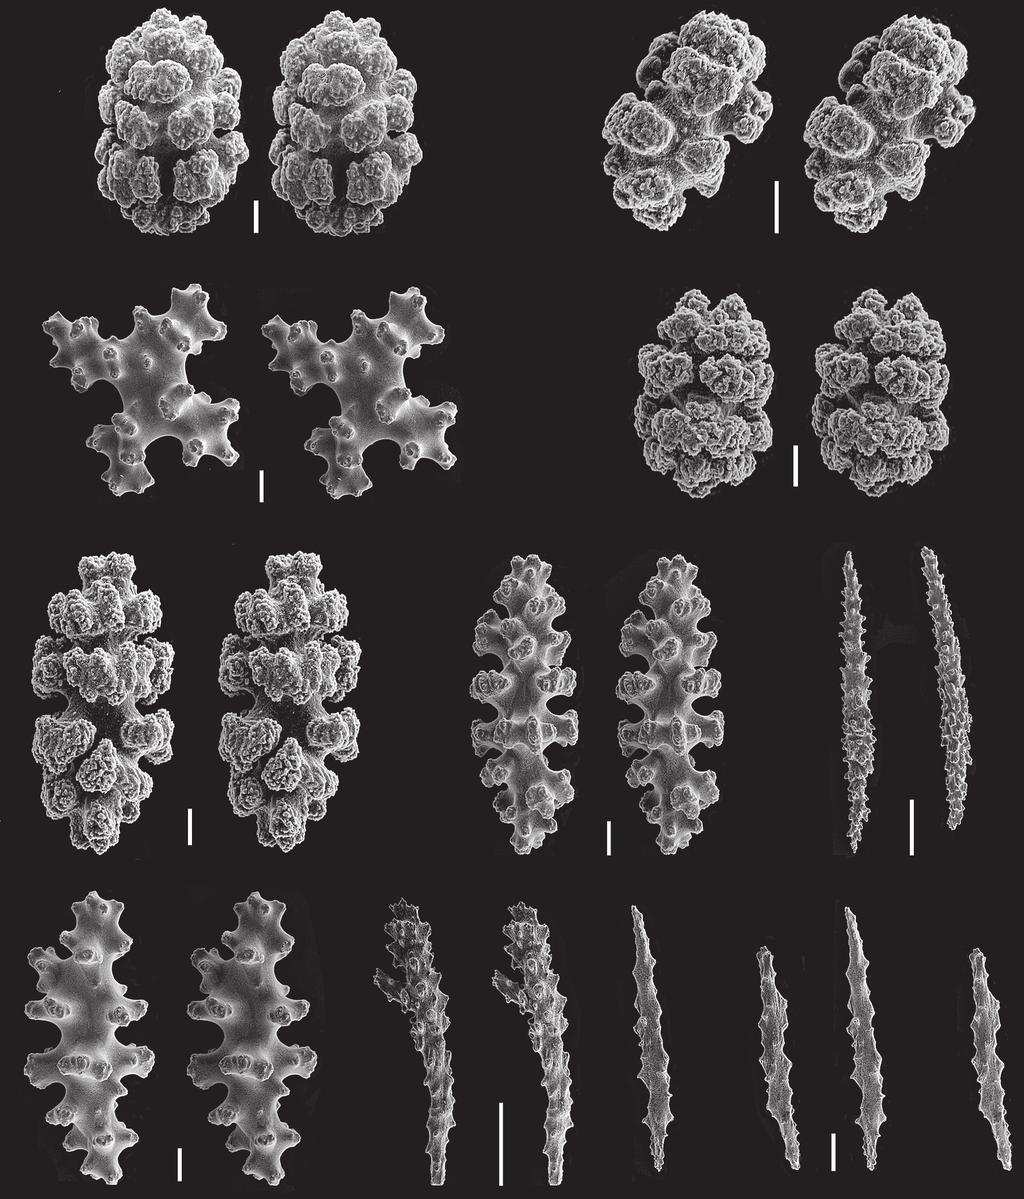 ZM078 265-274 sanchez/cairns 272 02-01-2007 14:03 Pagina 272 A B C E H D F I G J Fig. 6. SEM stereopairs of non-type specimen Alaskagorgia aleutiana sclerites (USNM 1010765).